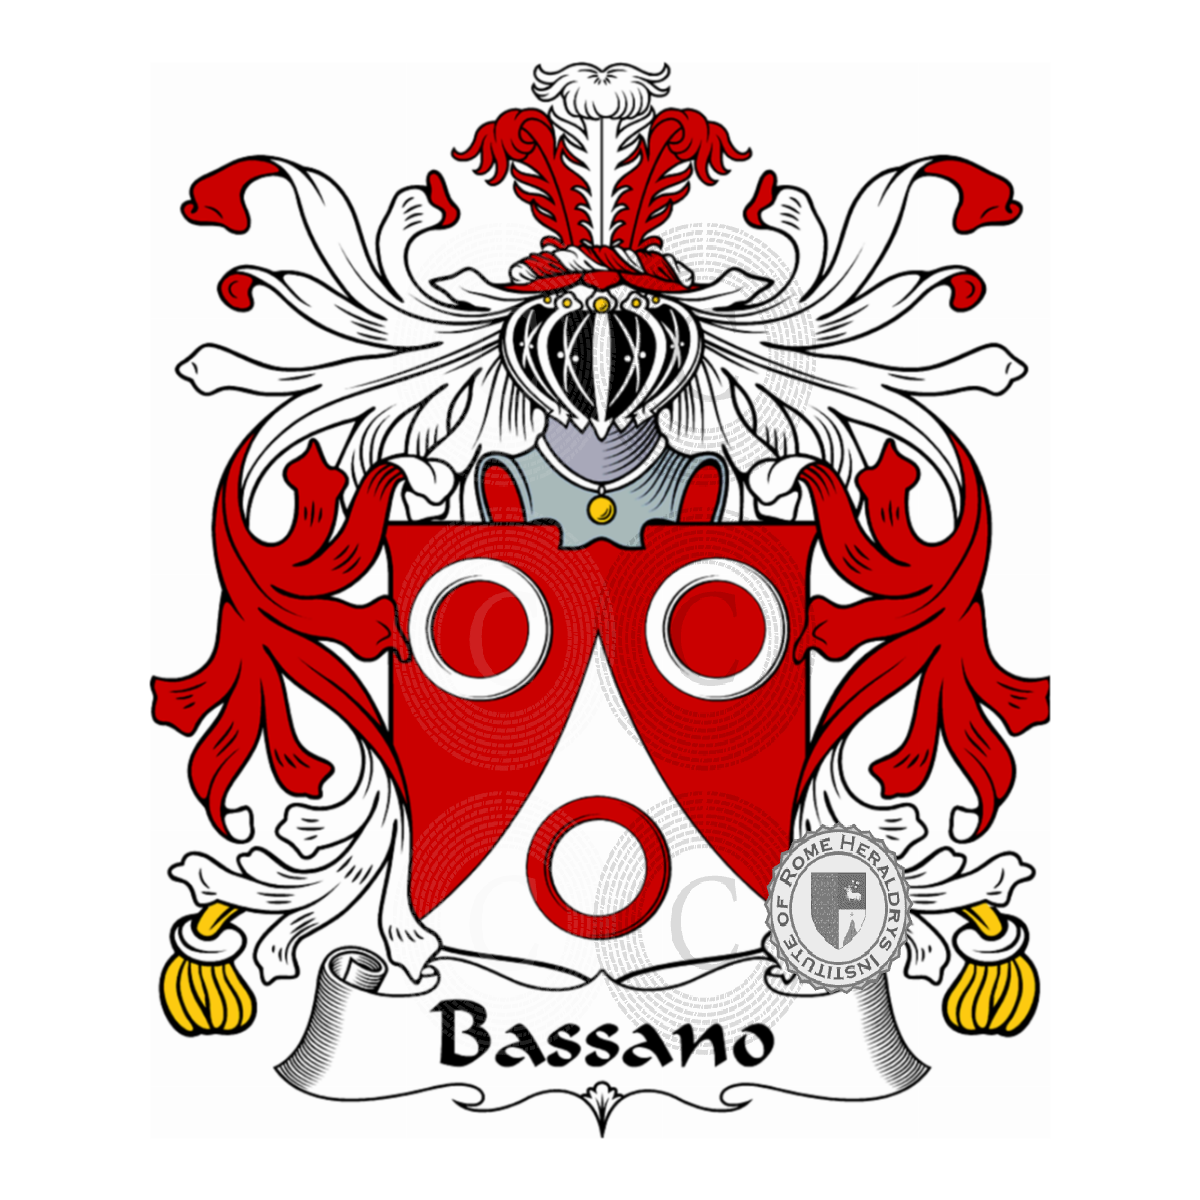 Brasão da famíliaBassano, Bassan,Dondonini